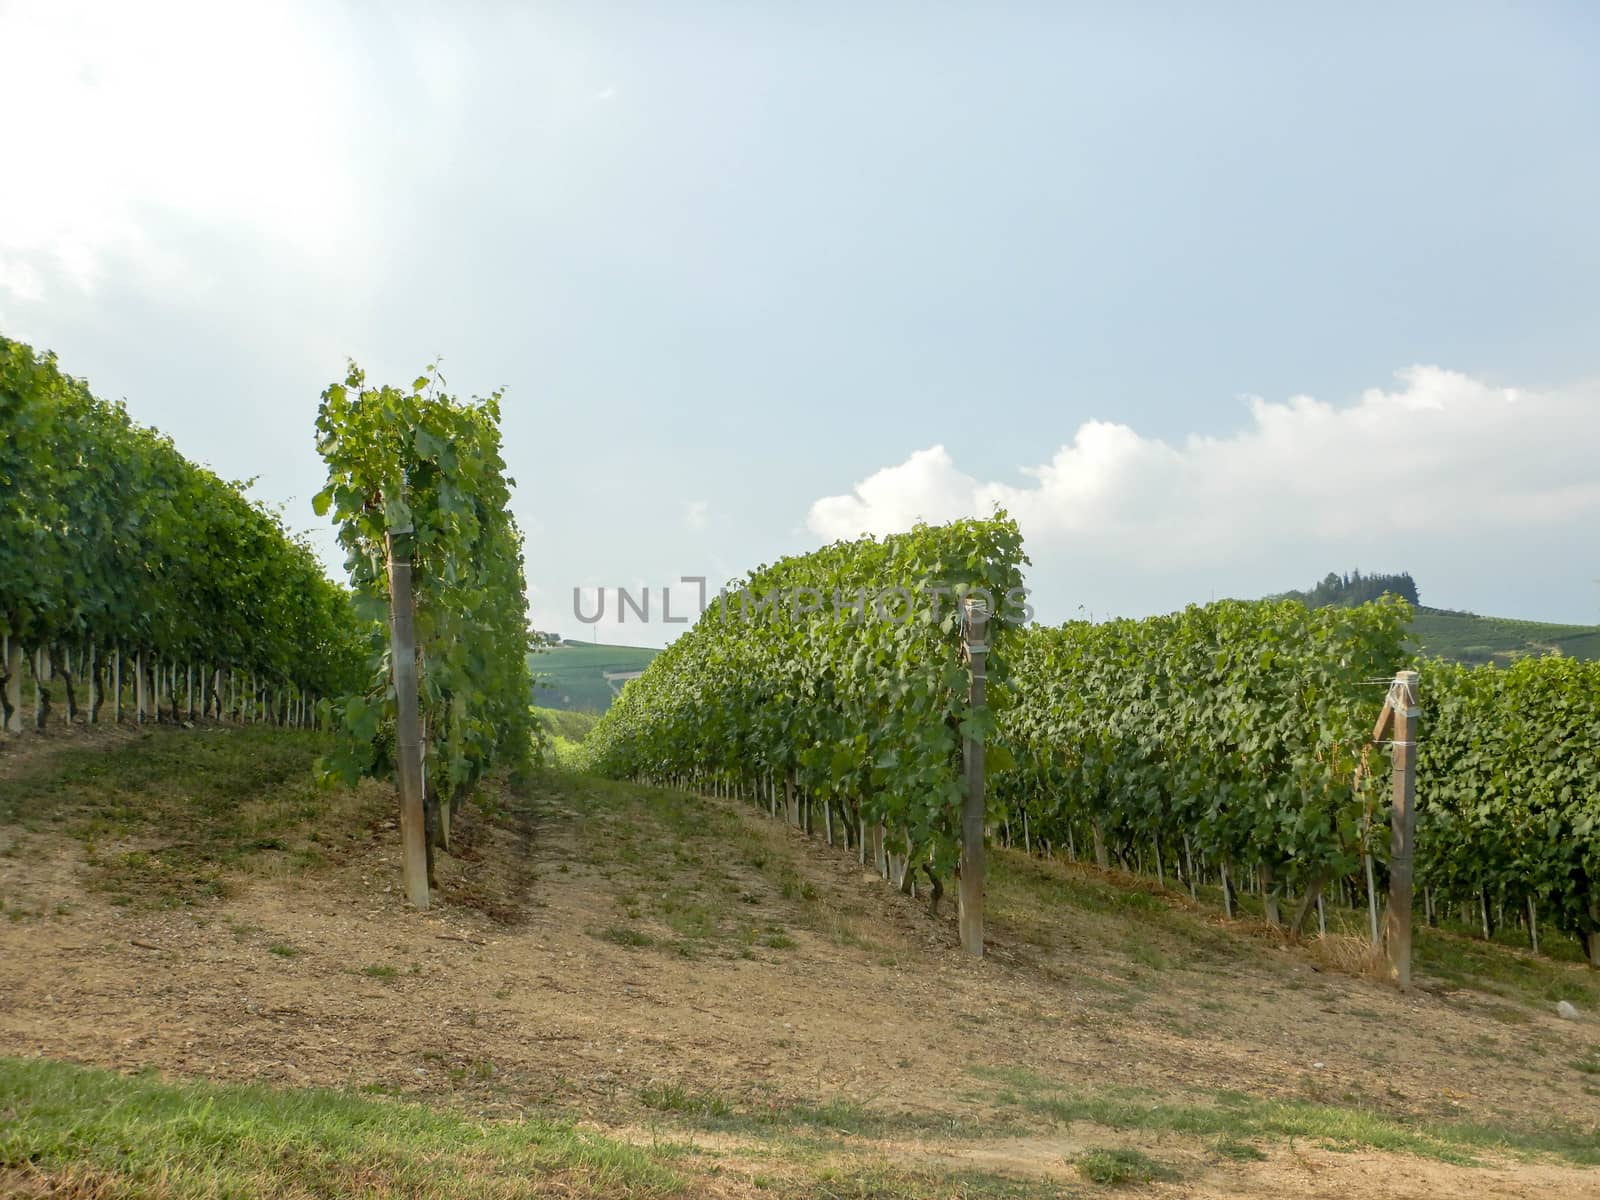 A vineyard near La Morra, Piedmont - Italy